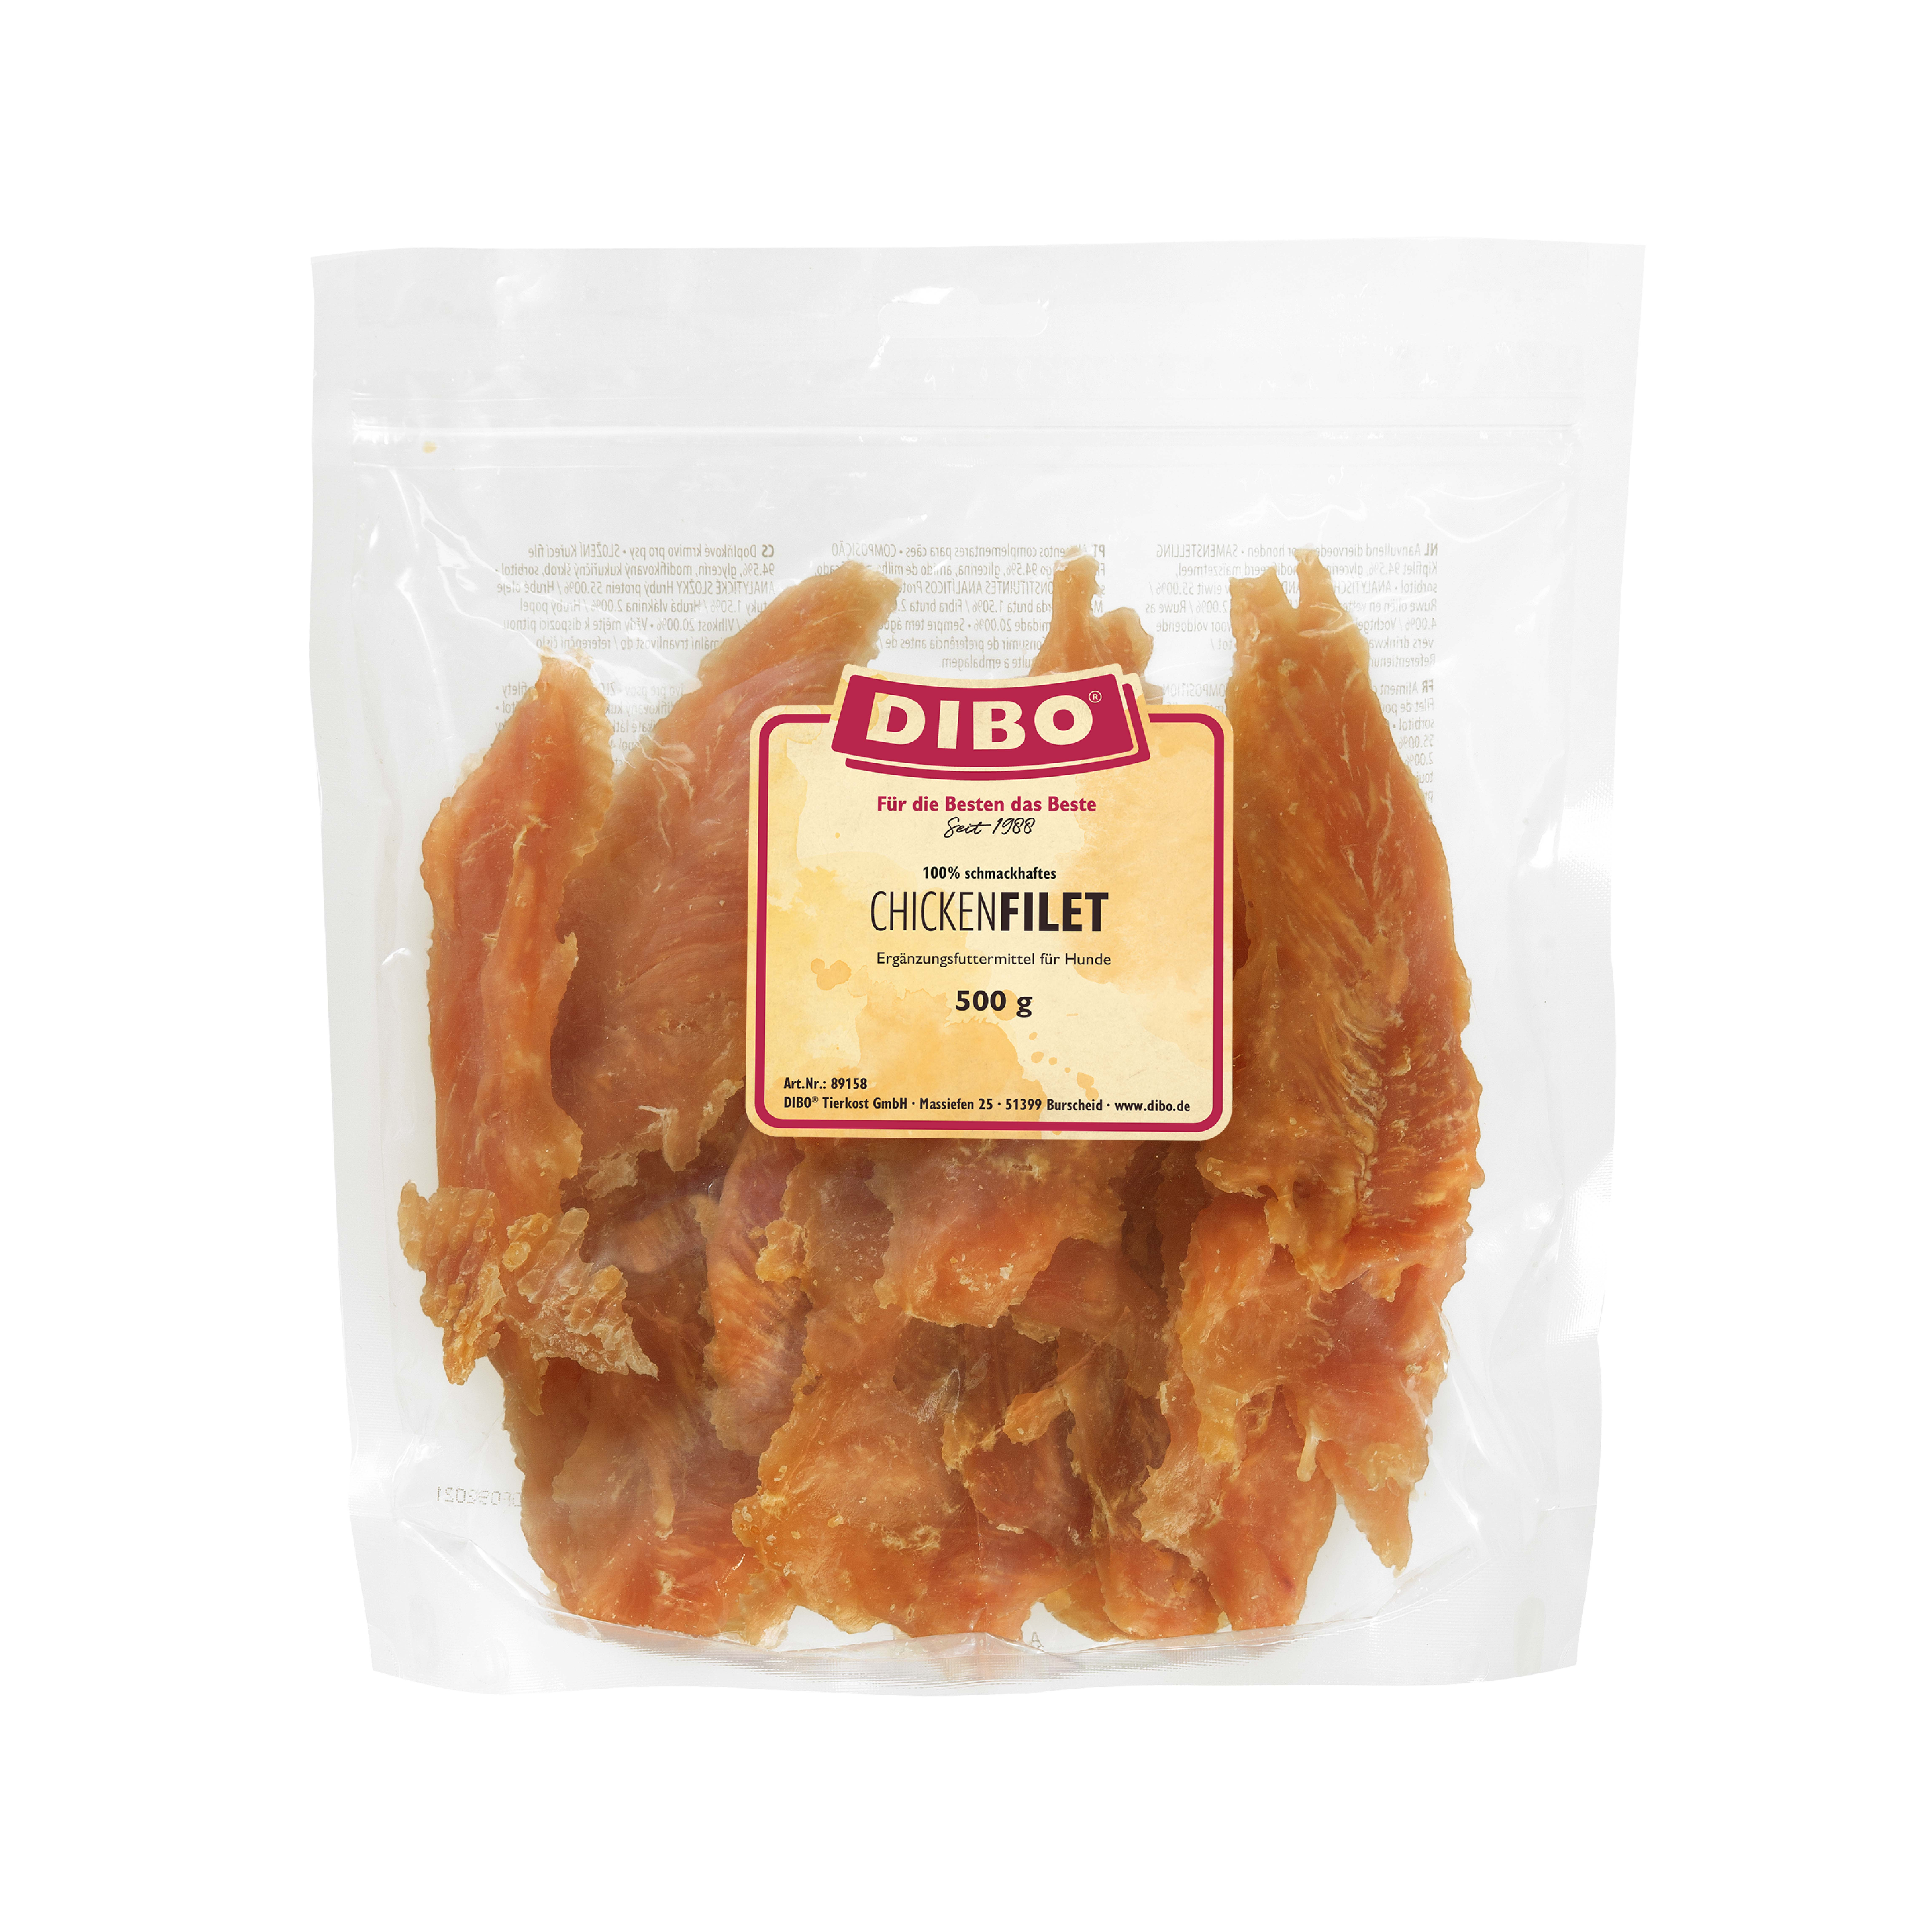 DIBO Chicken Filet, 500g-Beutel